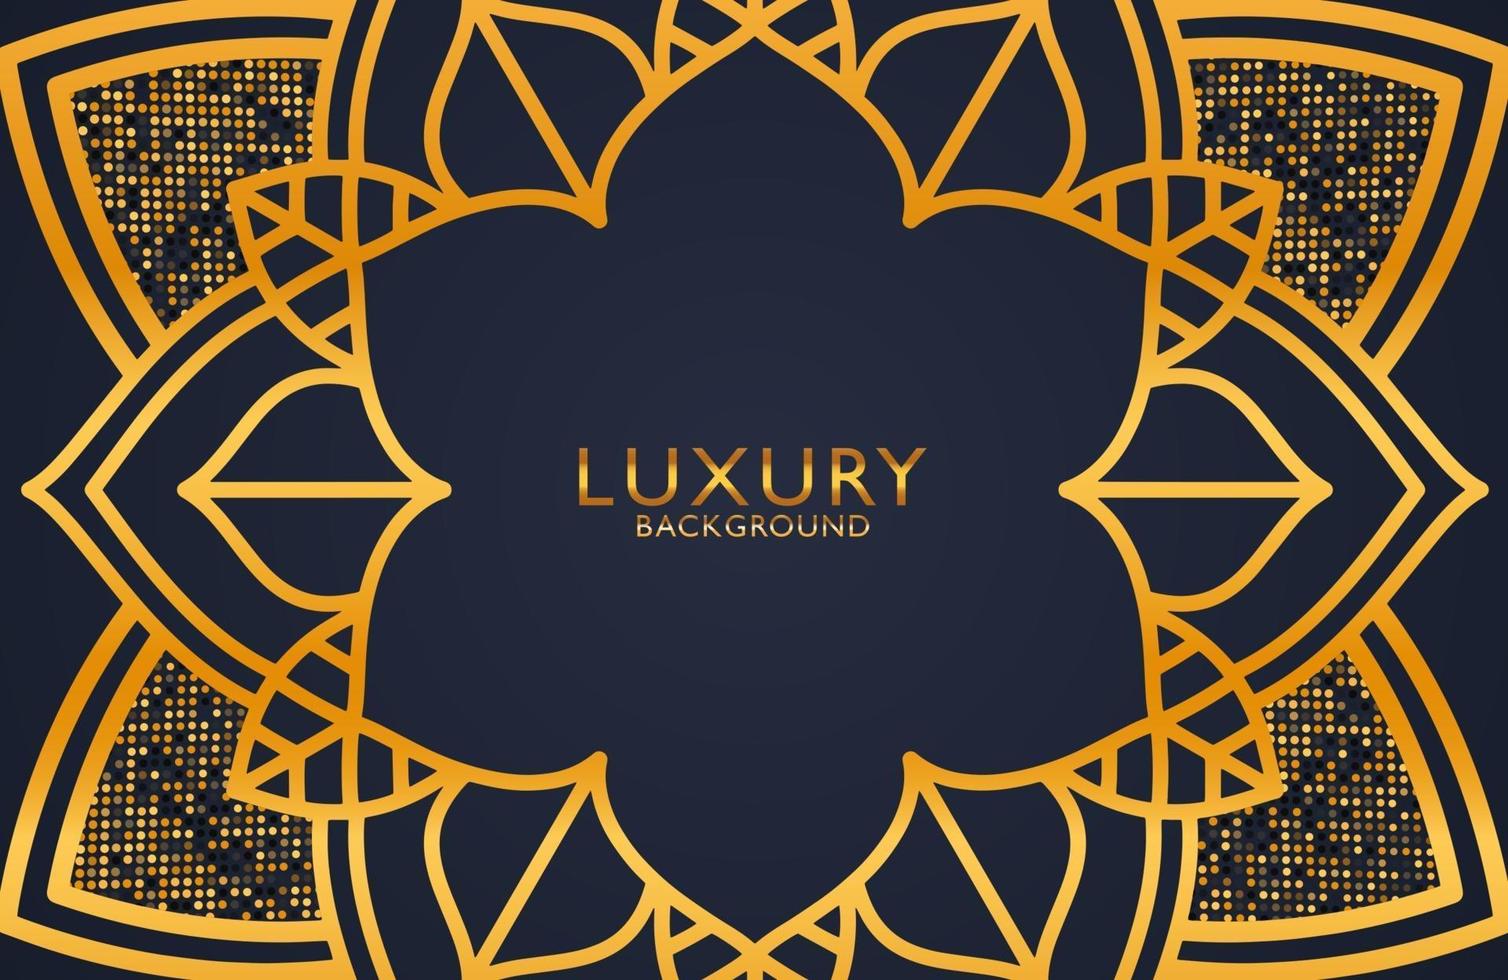 Luxury ornamental mandala design background in gold color. Graphic design element for invitation, cover, background. Elegant decoration vector